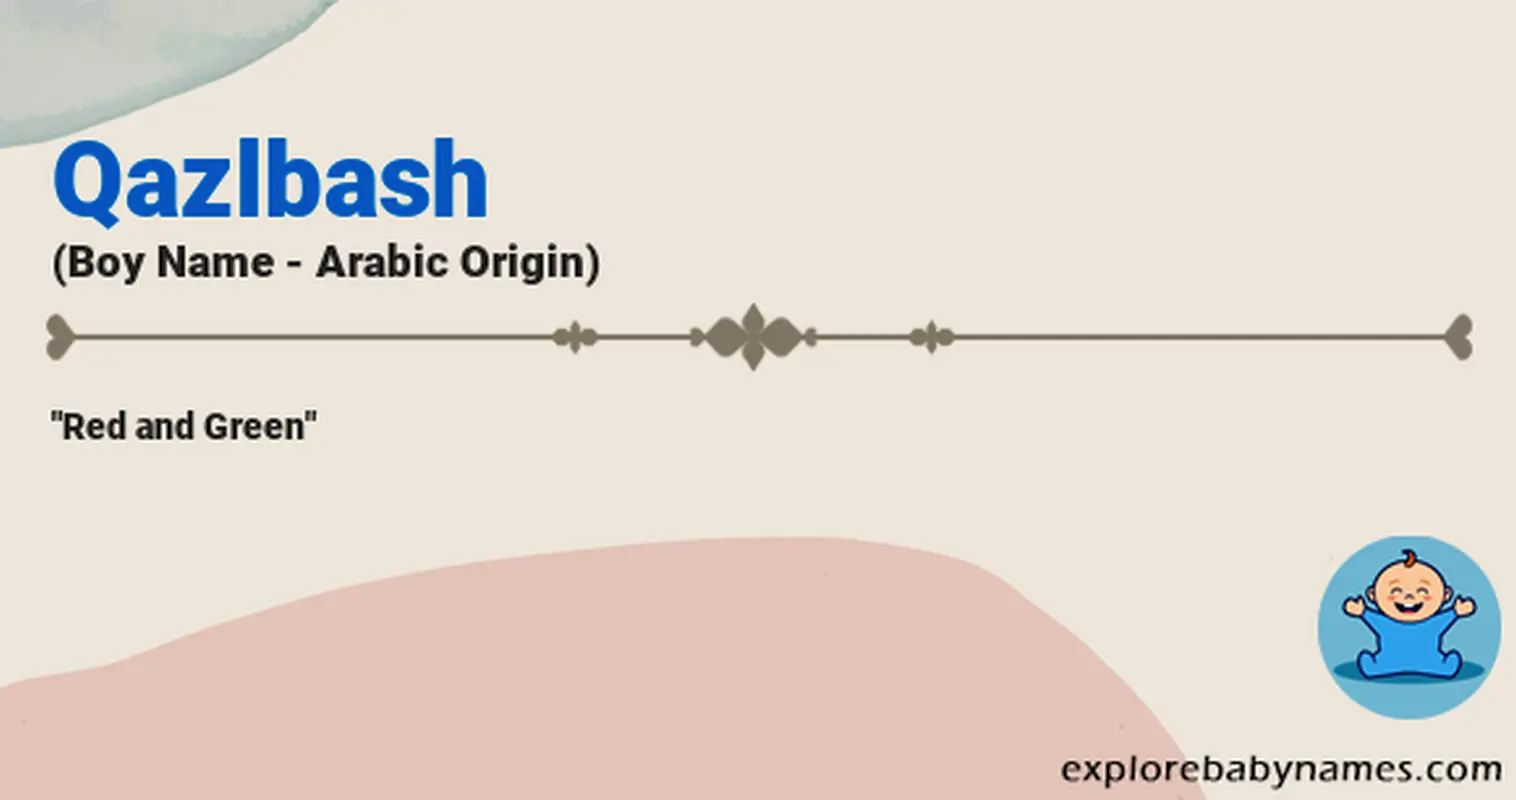 Meaning of Qazlbash